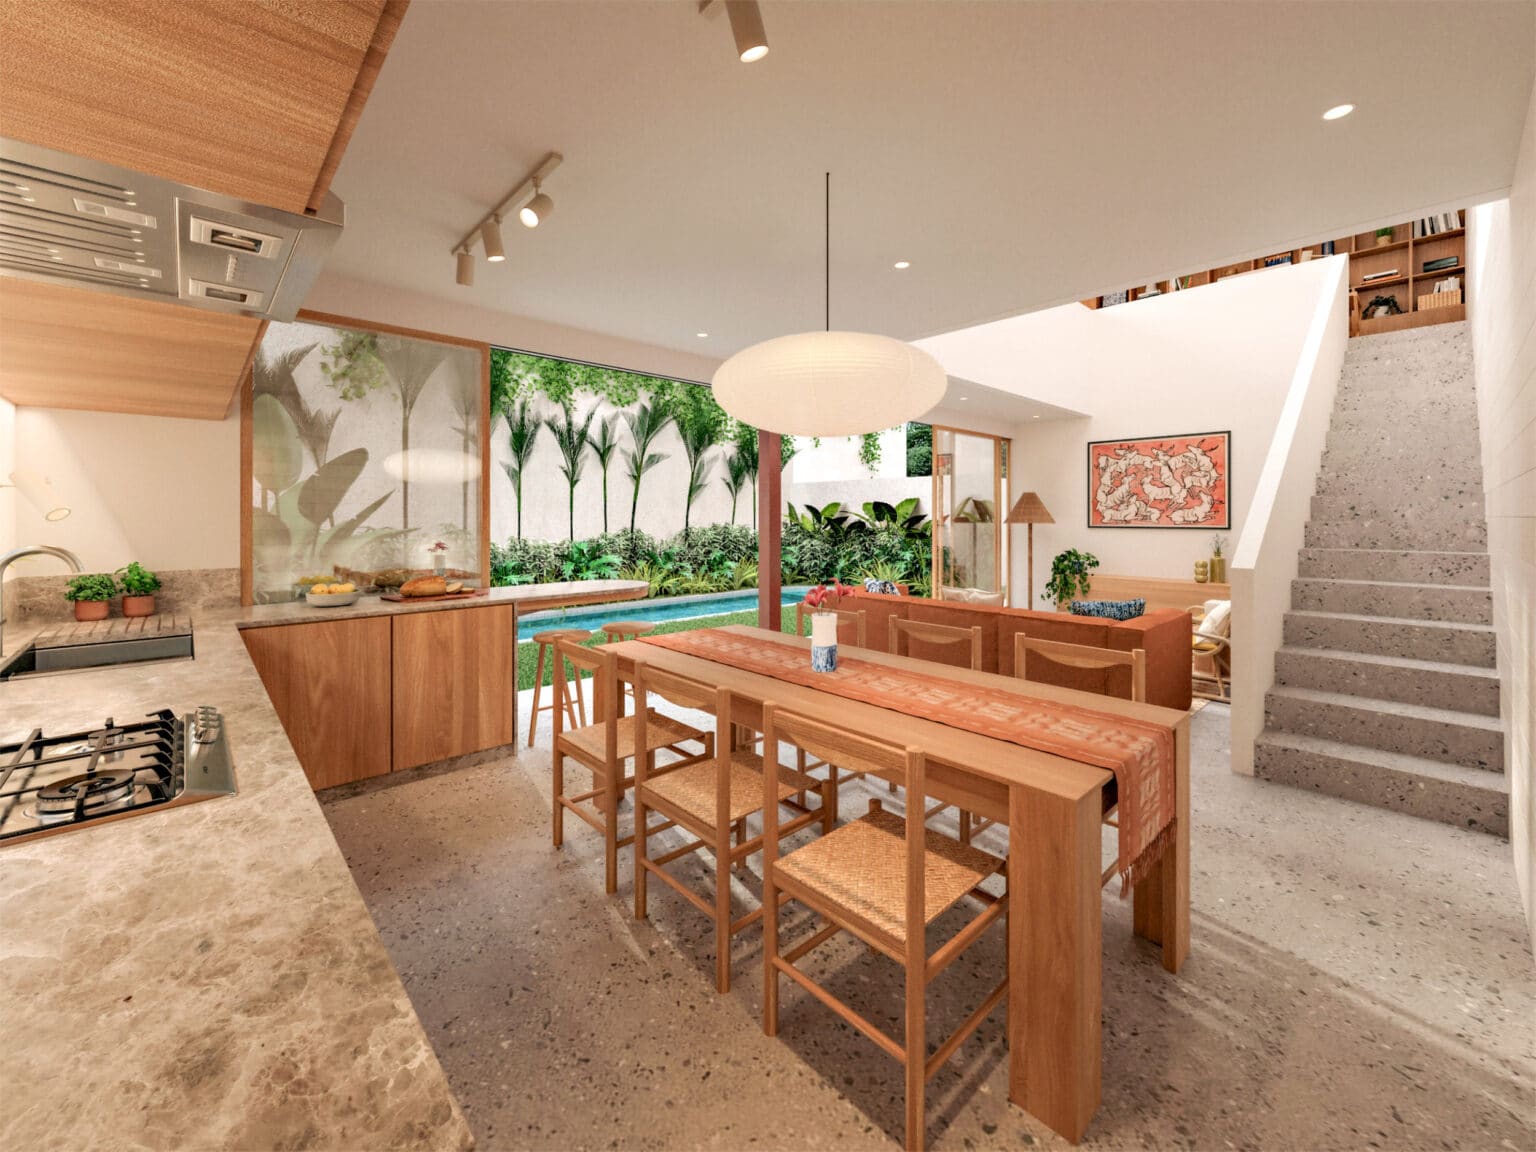 Design Assembly - Suku House - Bali Architect - Interior Design - Bali Villa - Wooden Facade - Dining Room - Kitchen